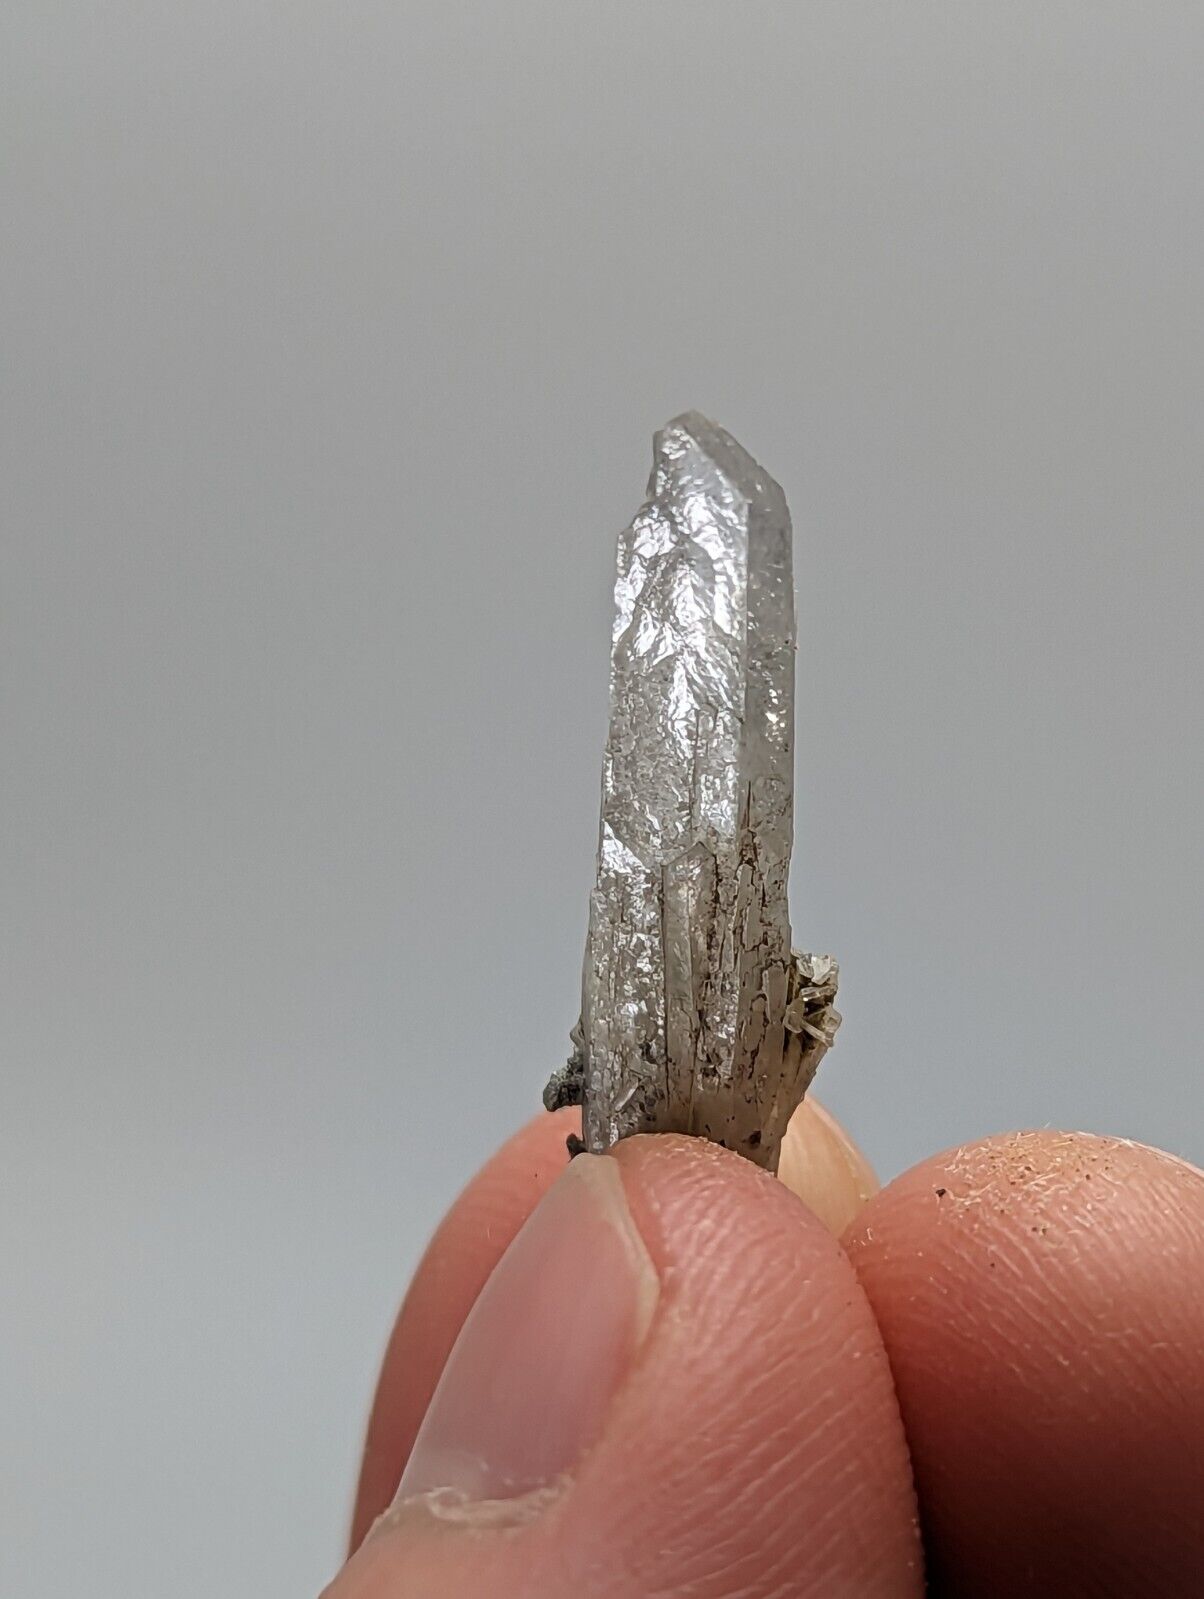 Rare Old Stock Barite Crystal, Magnet Cove, Arkansas, N.L. Bariod Division,1970s